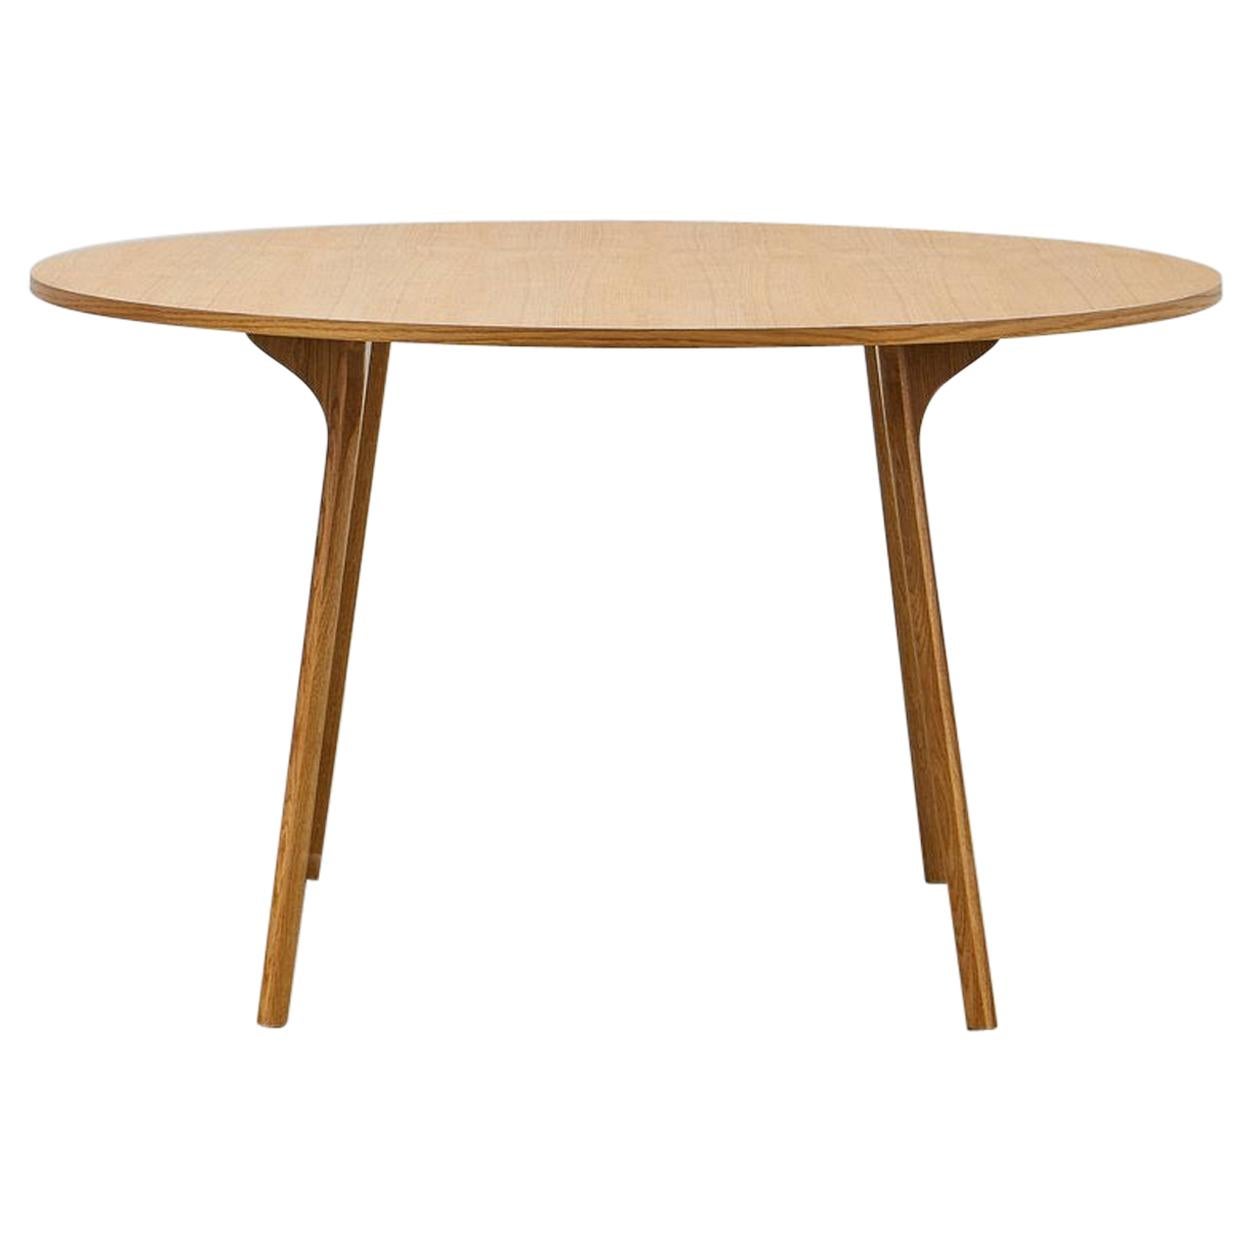 PH Circle Table, Natural Oak Wood Legs, Veneer Table Plate and Edge